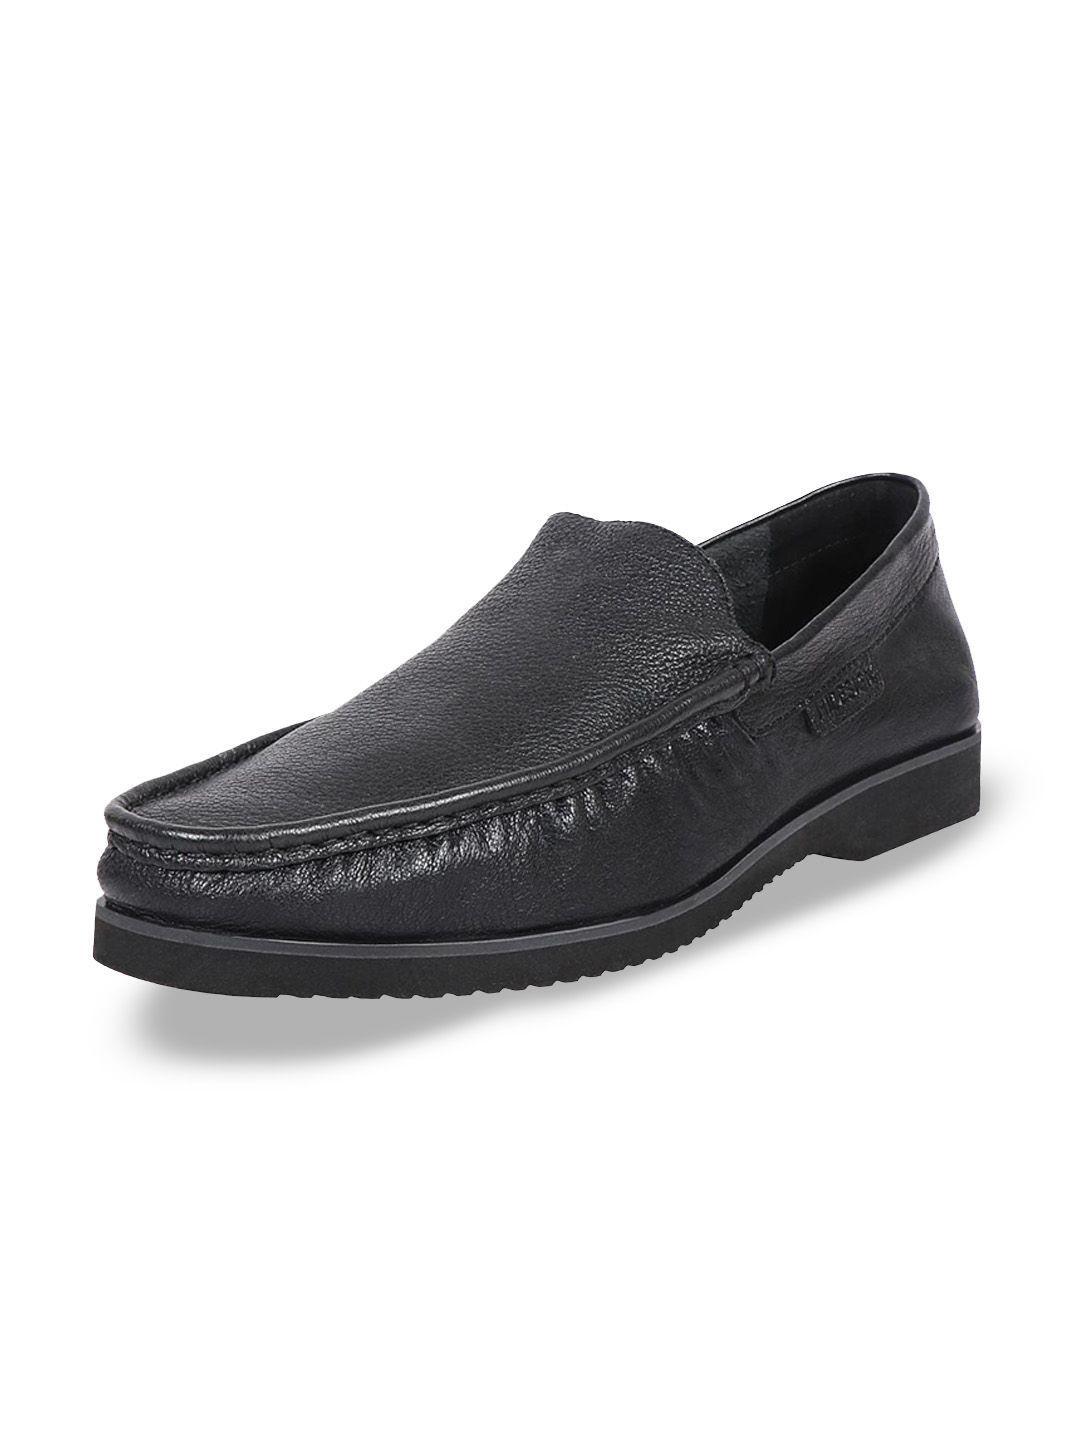 hidesign-men-black-leather-loafers